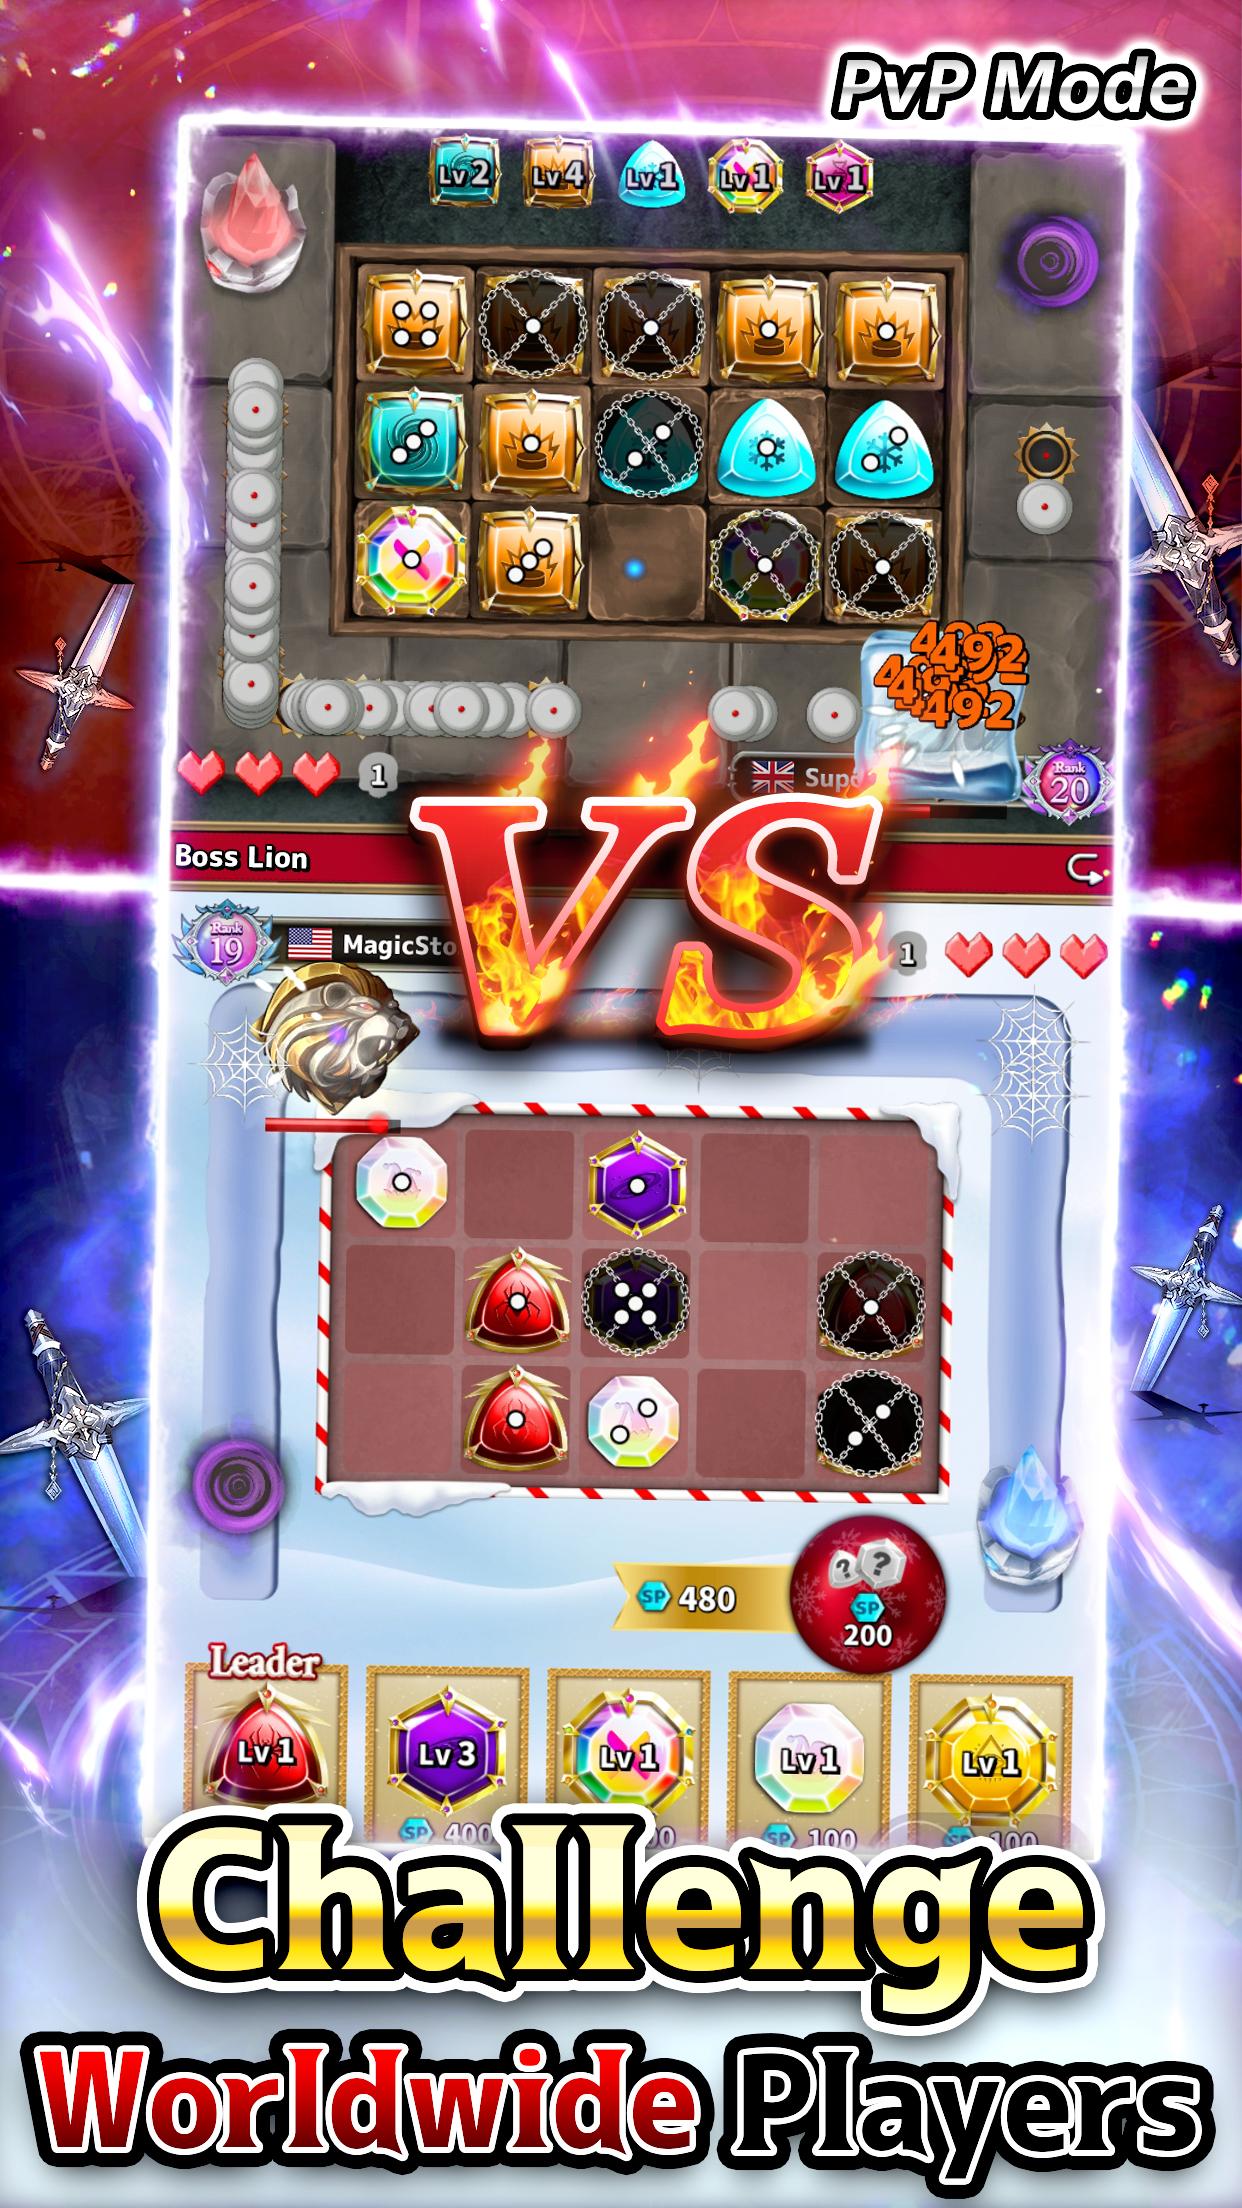 Magic Stone Arena Random PvP Tower Defense Game 1.29.0 Screenshot 5